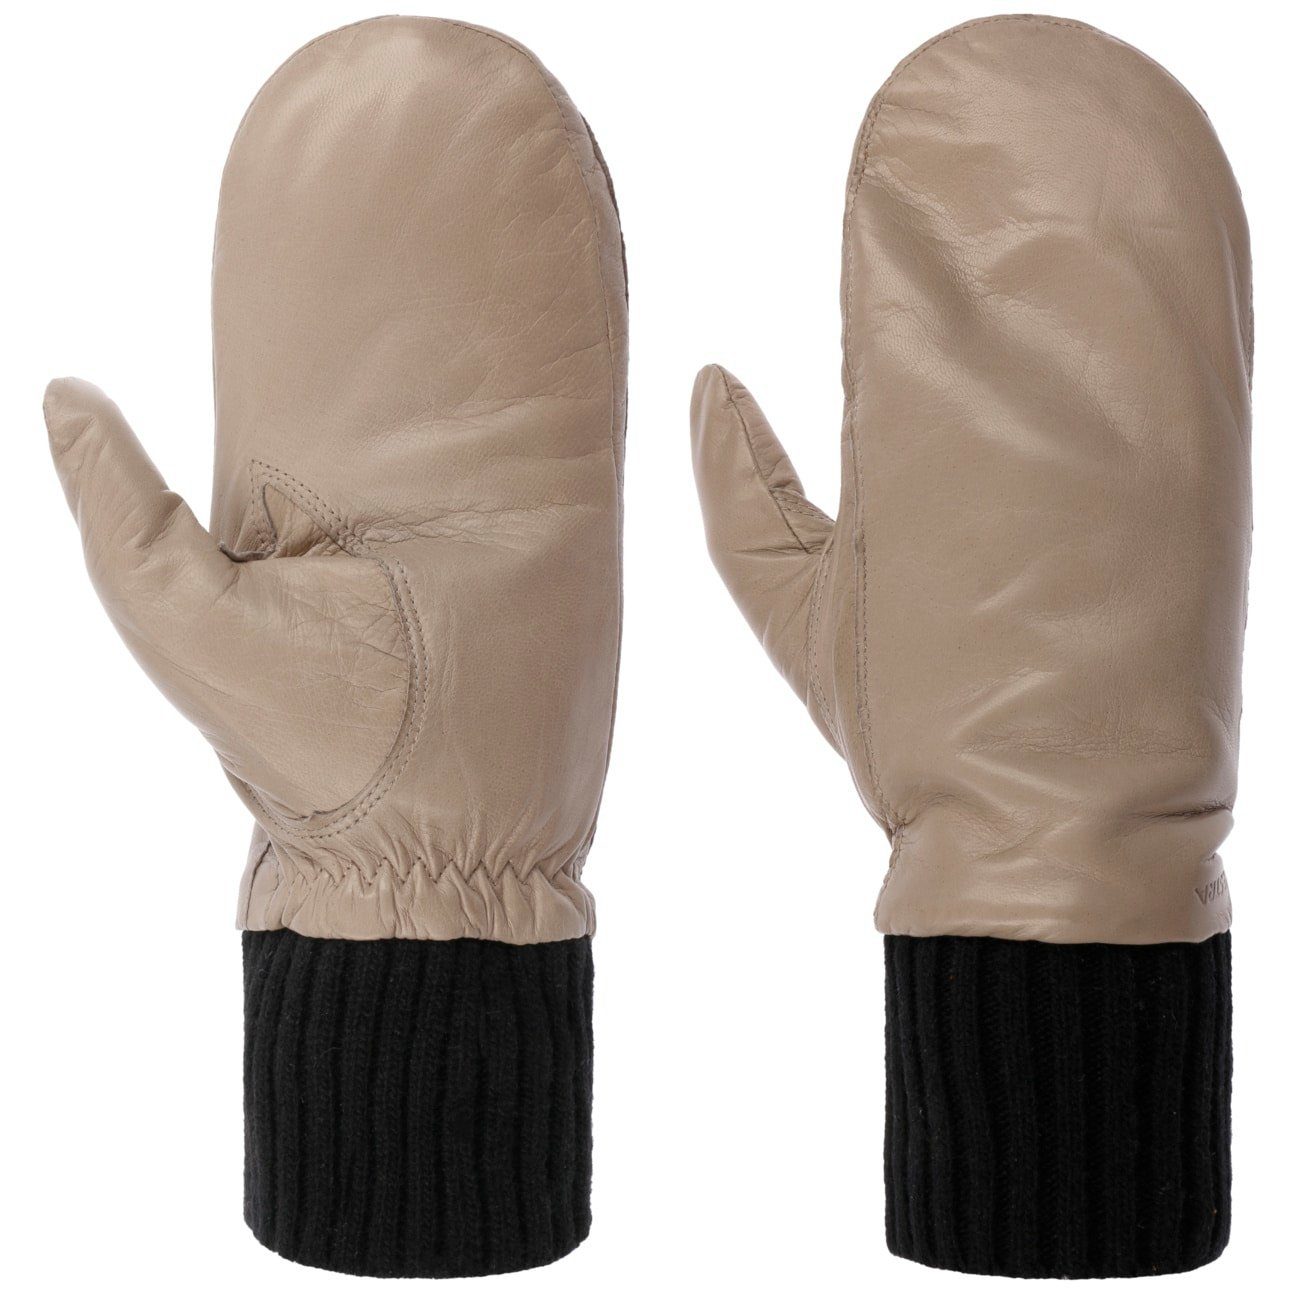 Beige Herren Handschuhe online kaufen | OTTO